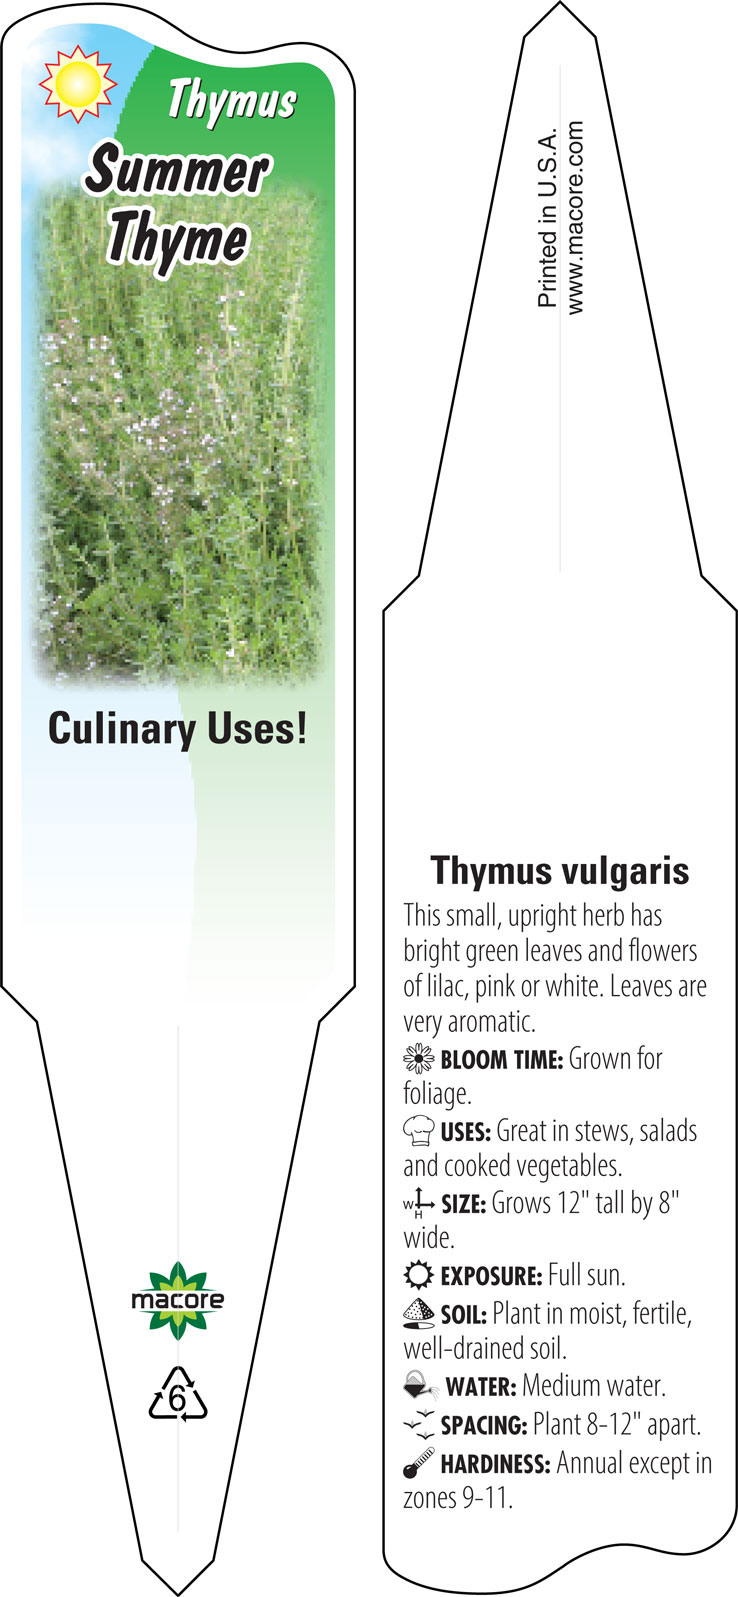 Summer Thyme, Thymus vulgaris